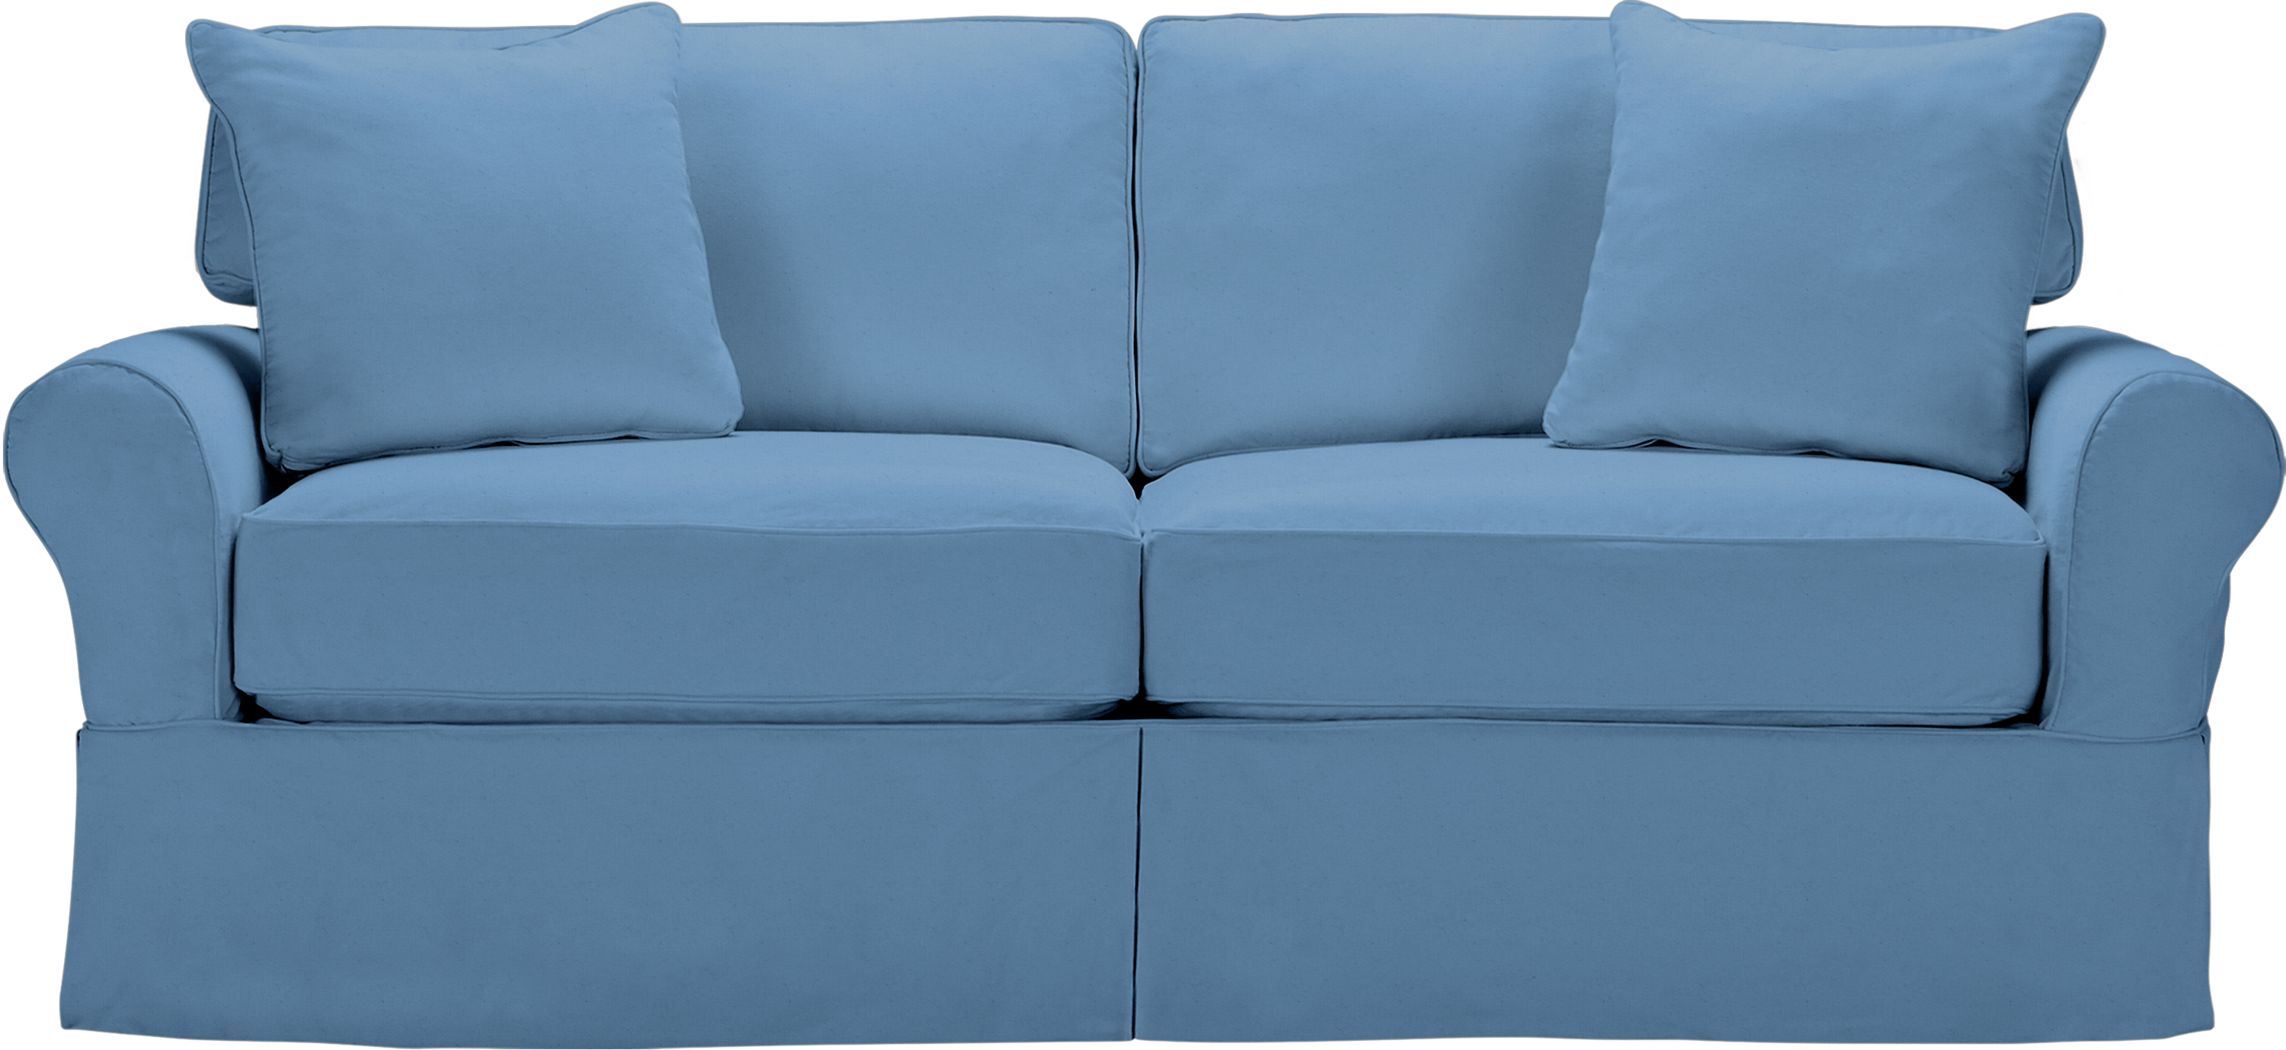 Blue Denim Sofa Slipcovers